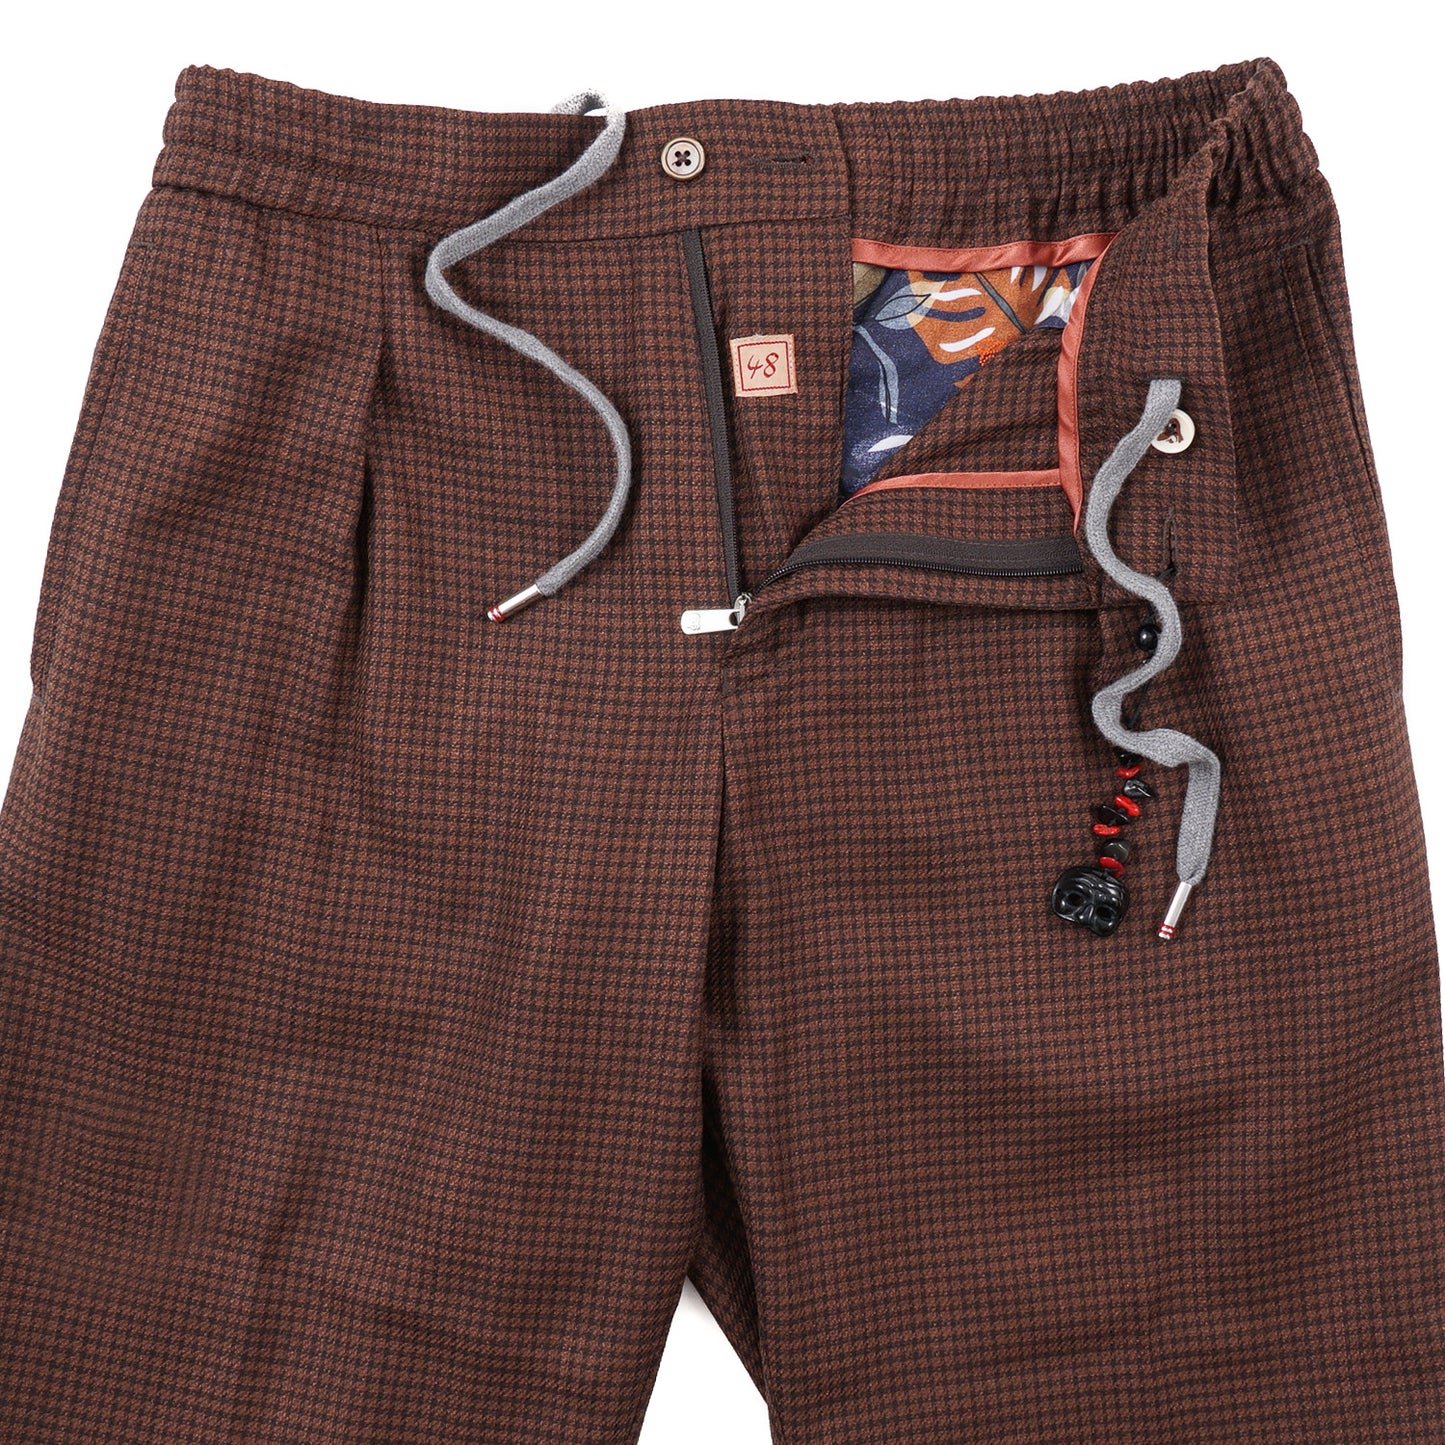 Marco Pescarolo Wool-Silk Jogger Pants - Top Shelf Apparel